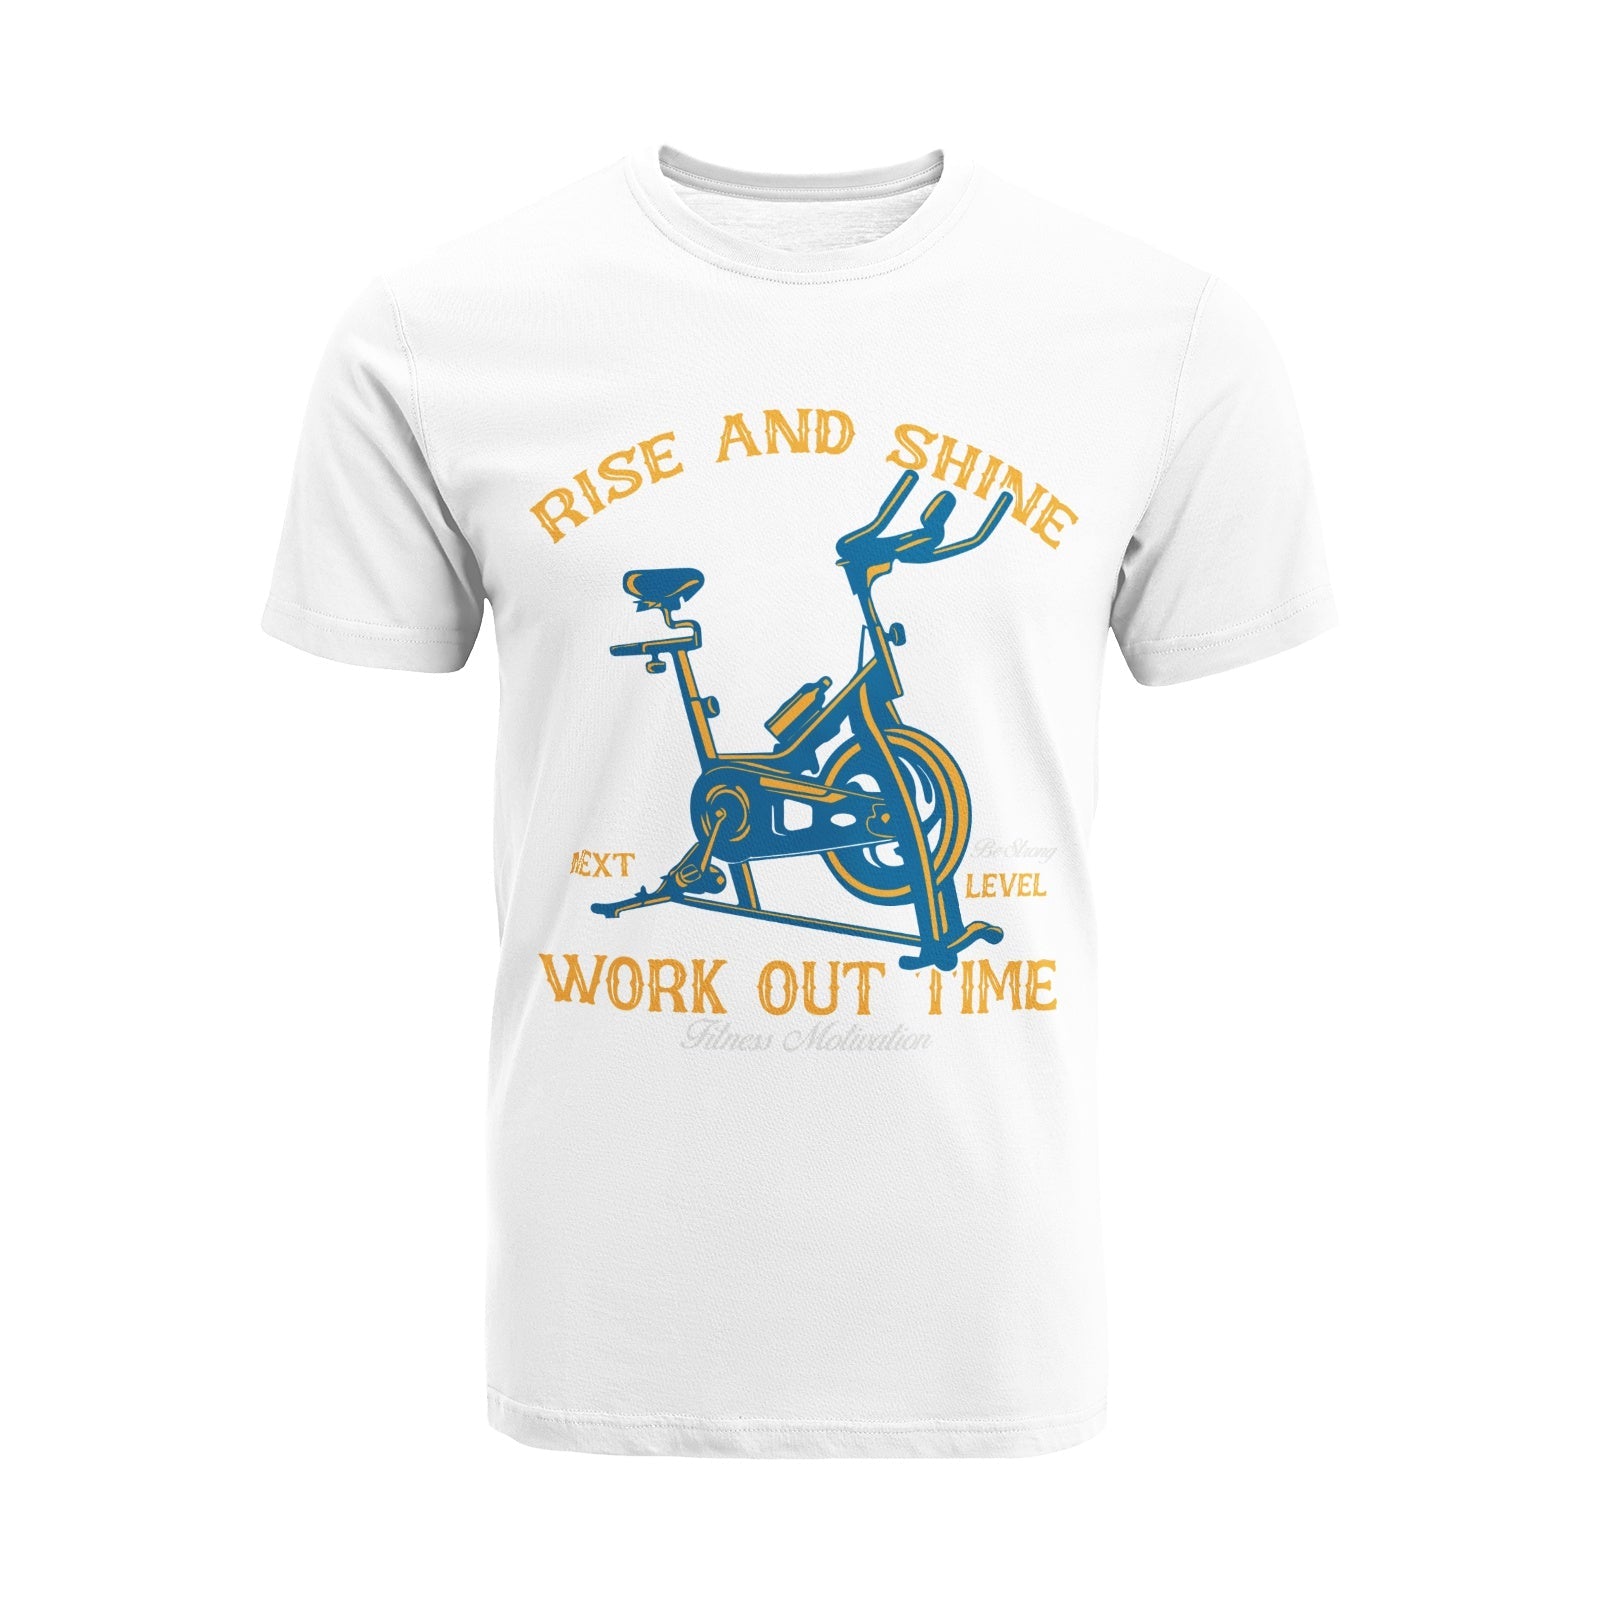 Unisex Short Sleeve Crew Neck Cotton Jersey T-Shirt Gym No. 29 - Tara-Outfits.com